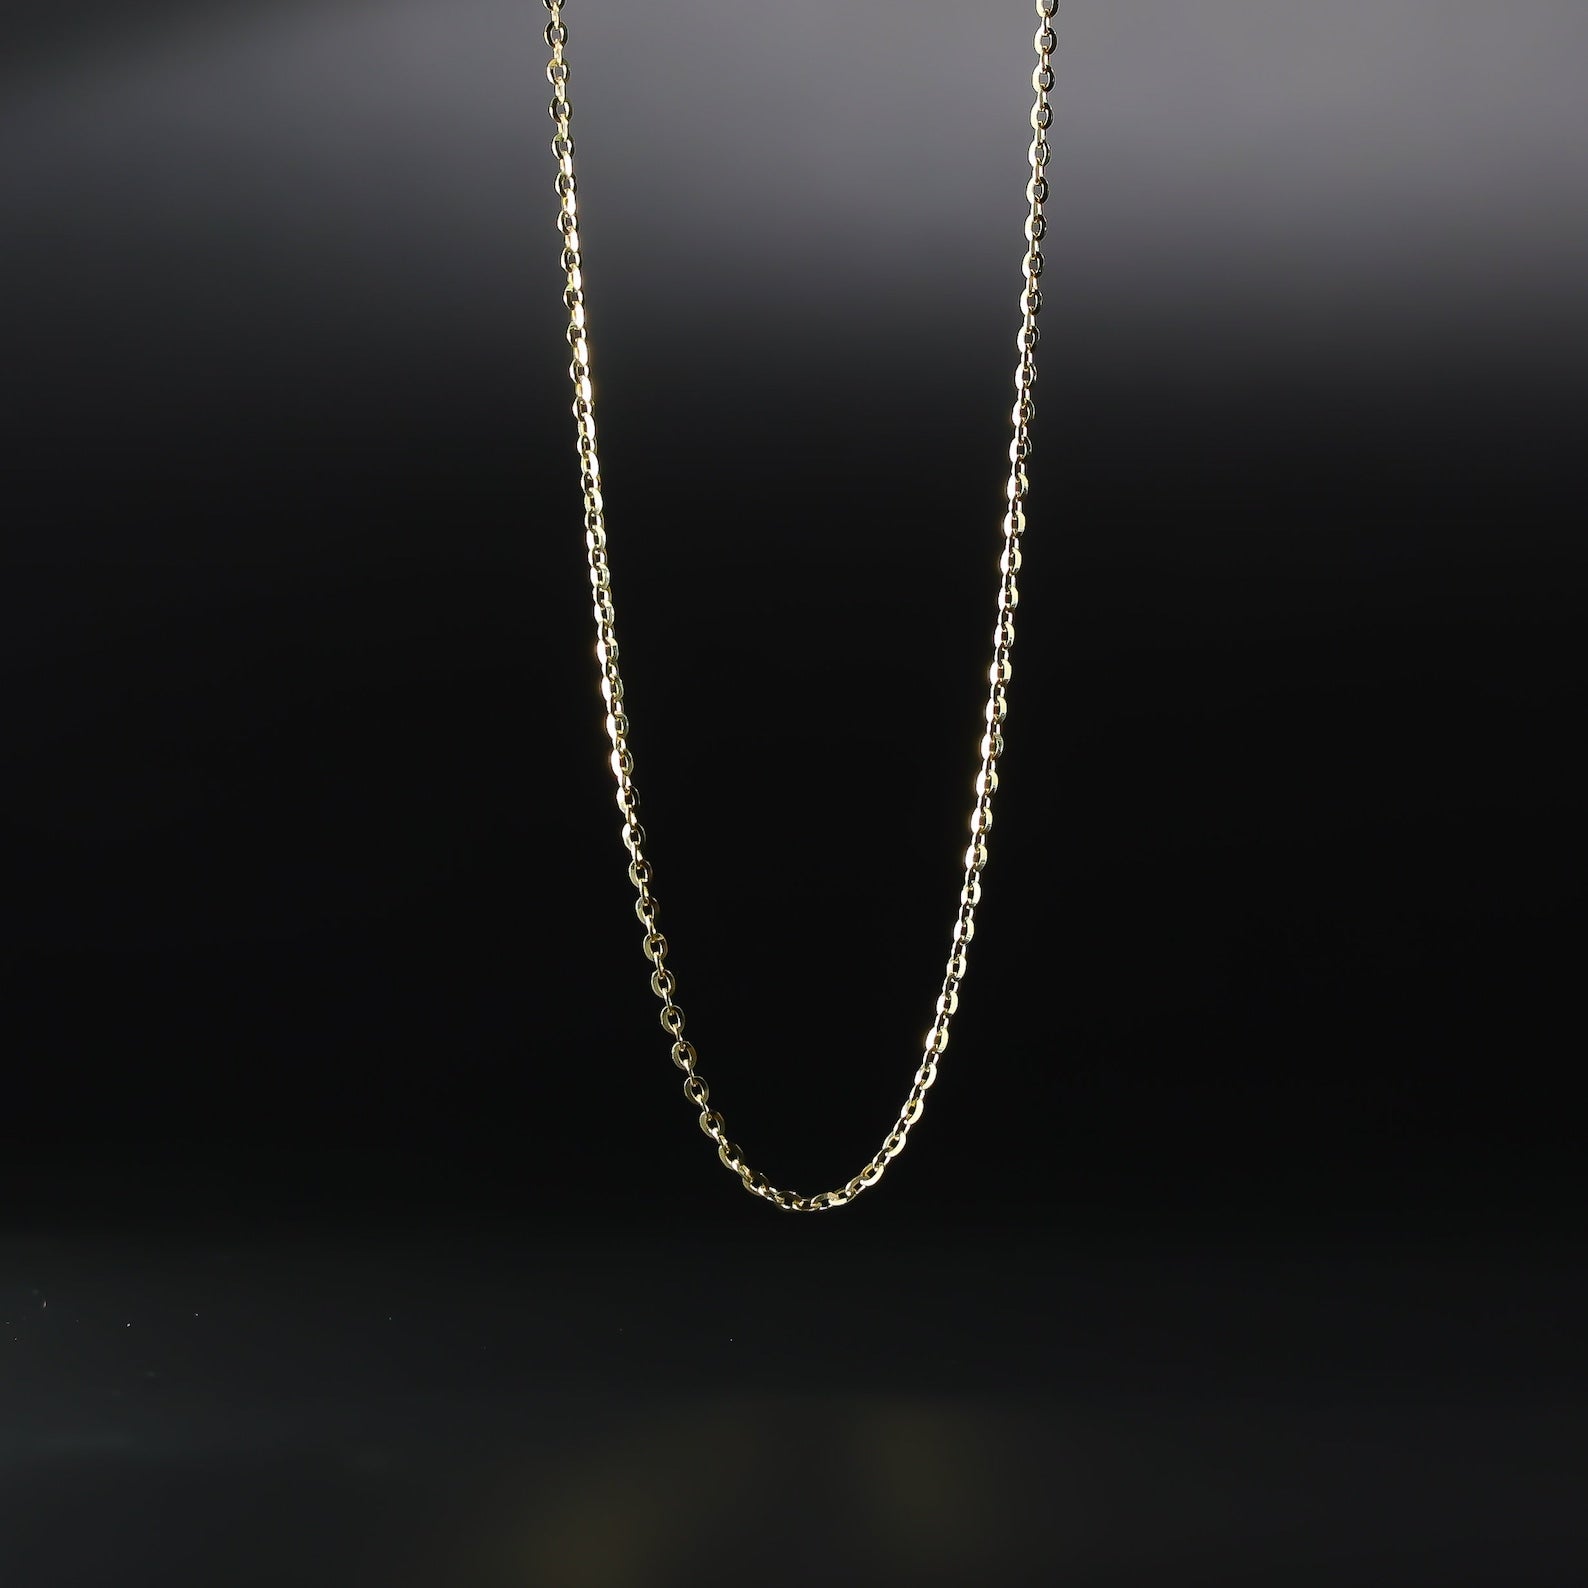 Gold Heart Locket Pendant Model-0617 - Charlie & Co. Jewelry